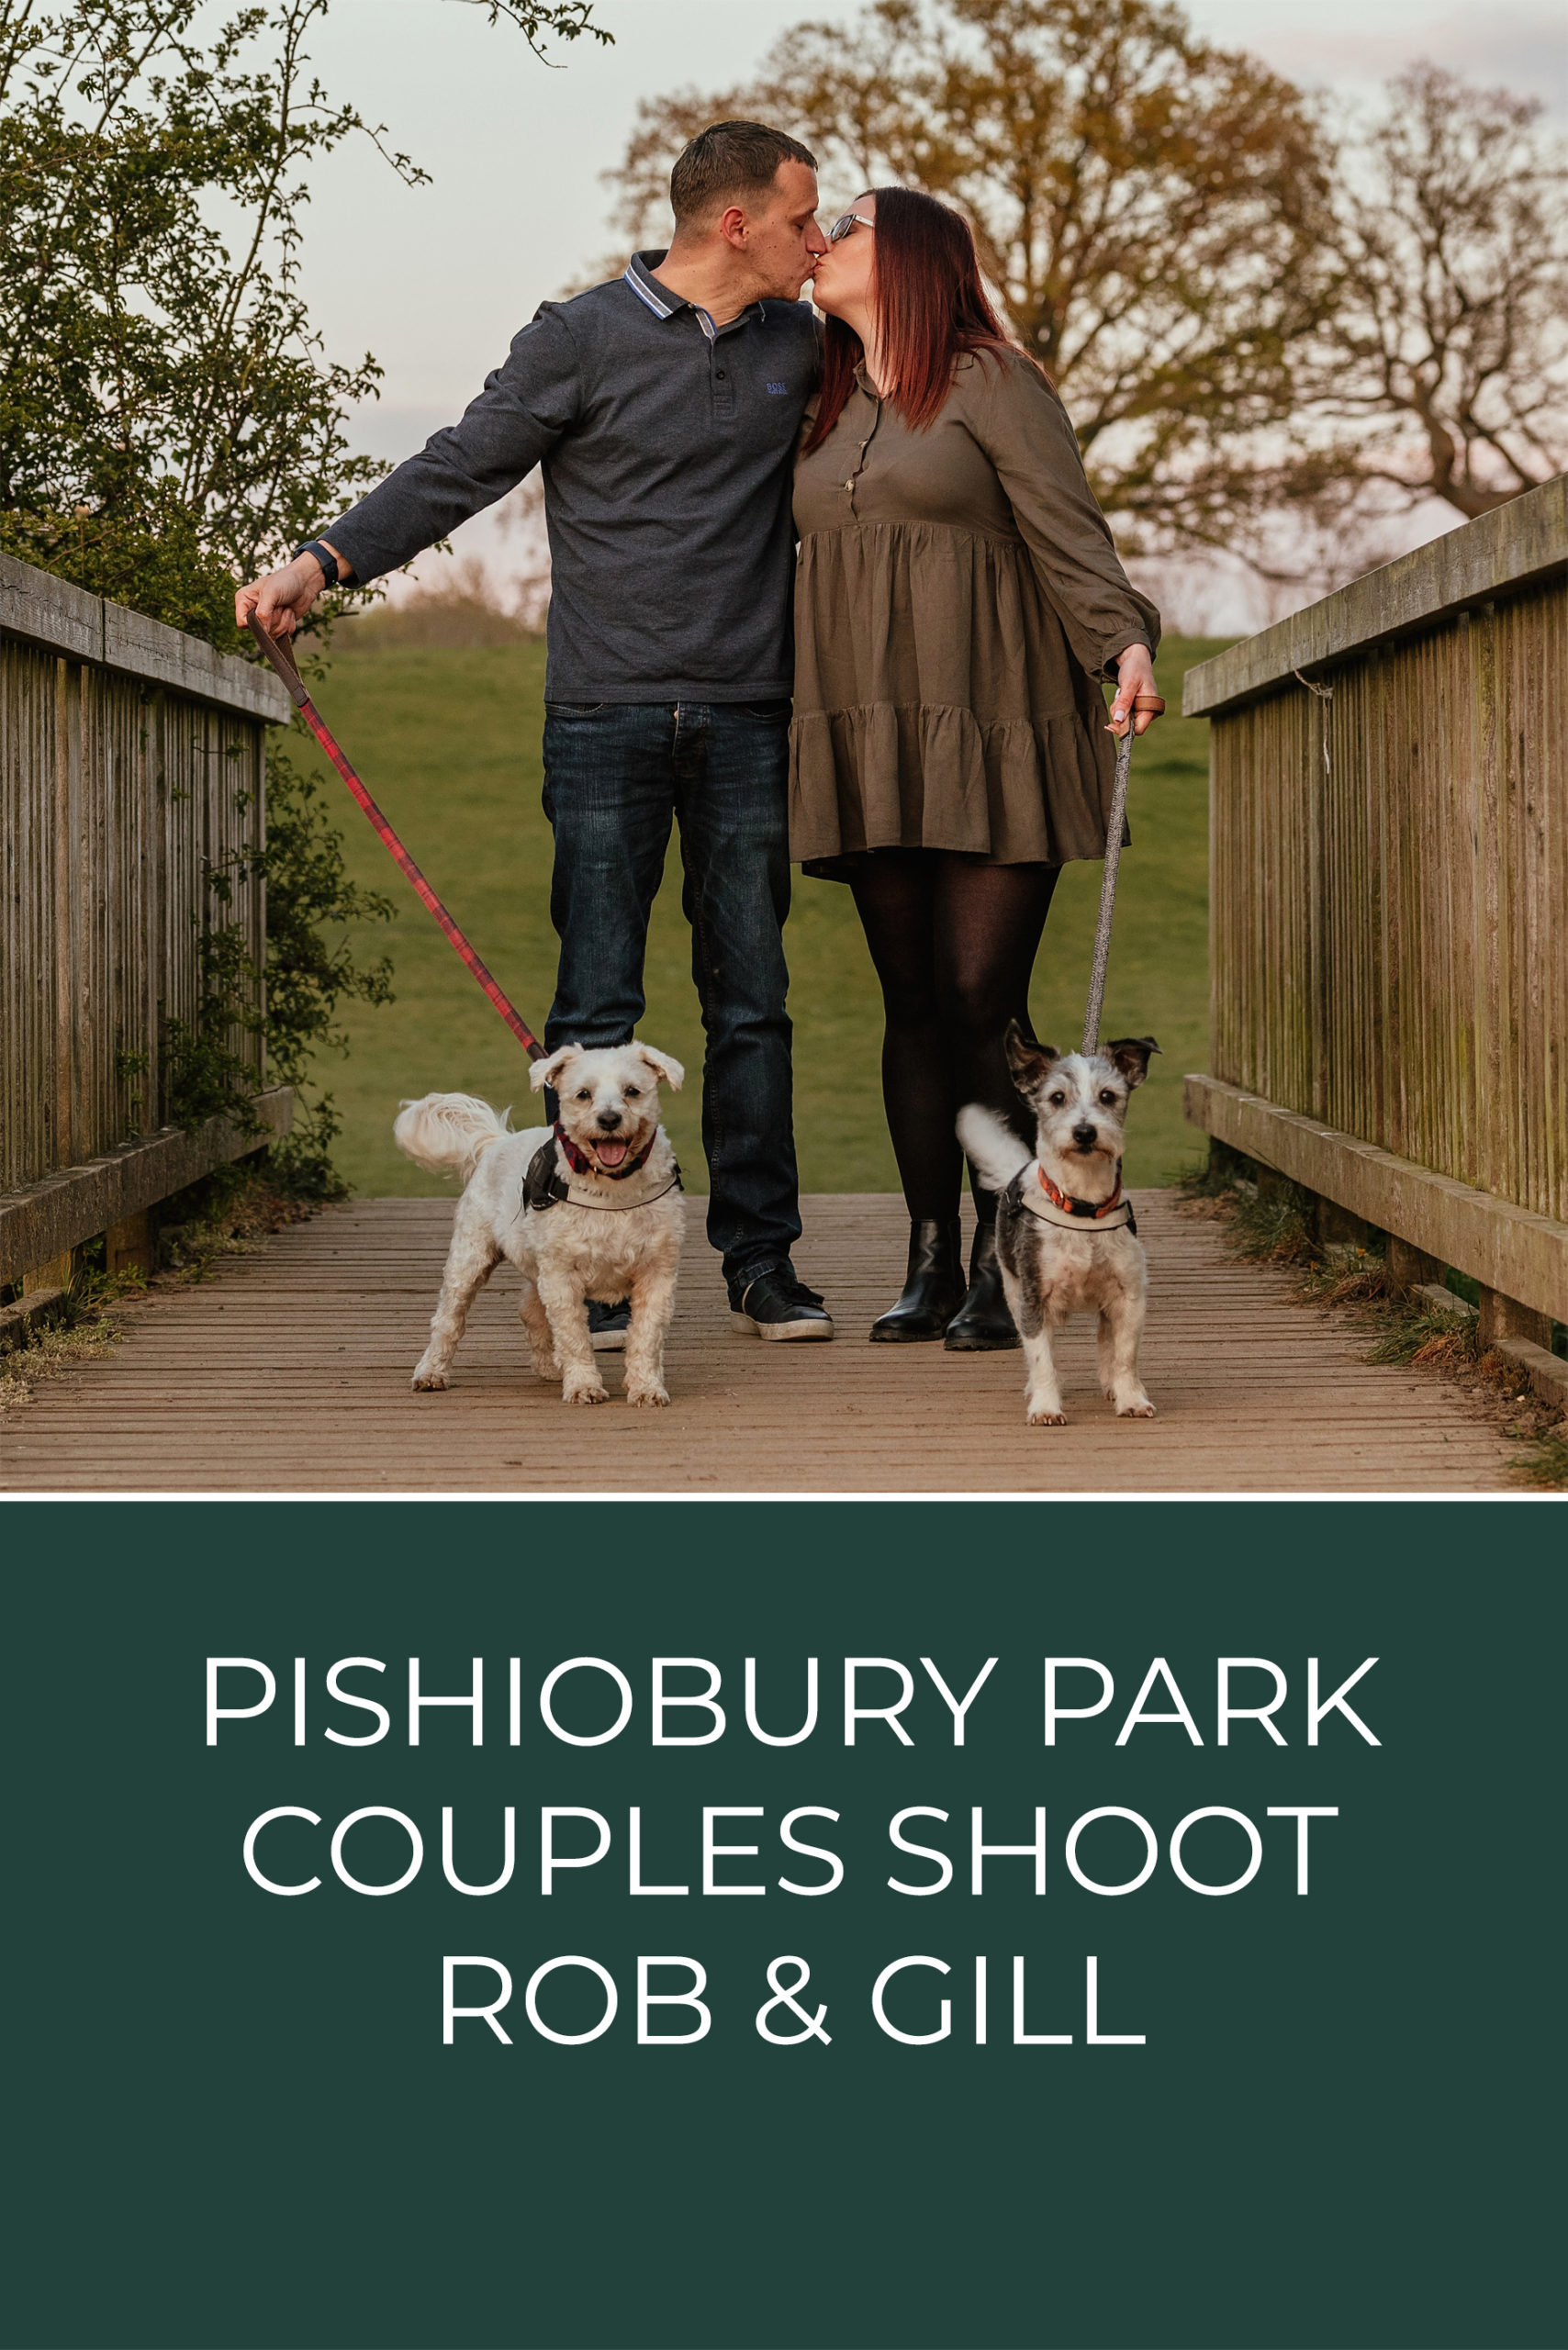 Pishiobury Park Couples Shoot Pinterest Graphic